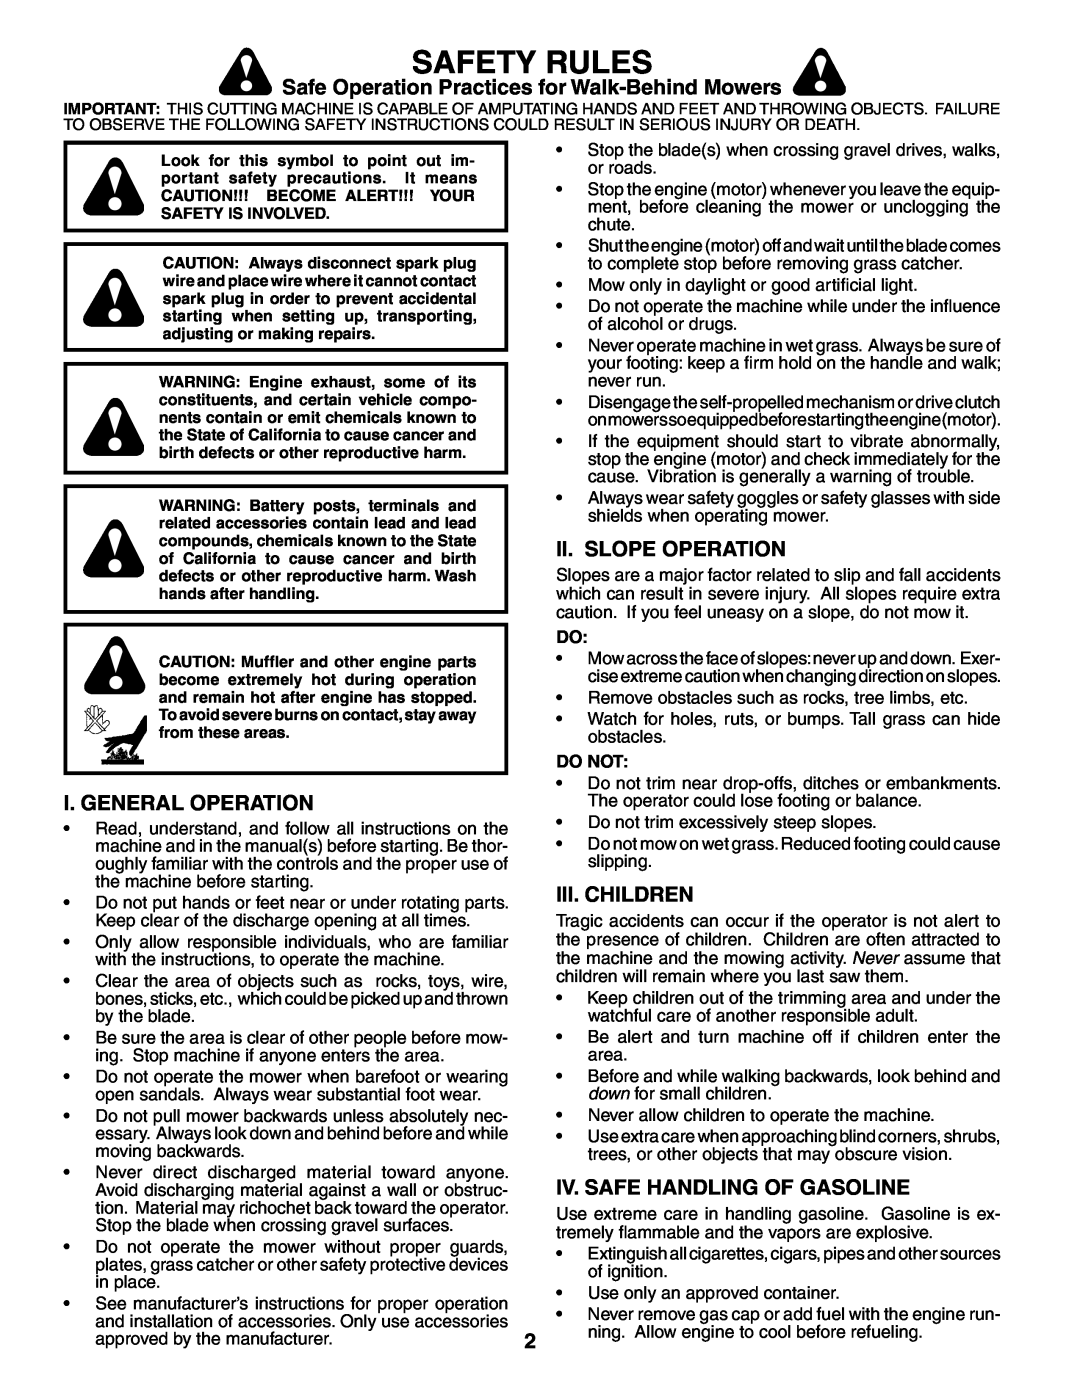 Husqvarna 67521 HV Safety Rules, Safe Operation Practices for Walk-BehindMowers, Ii. Slope Operation, I. General Operation 